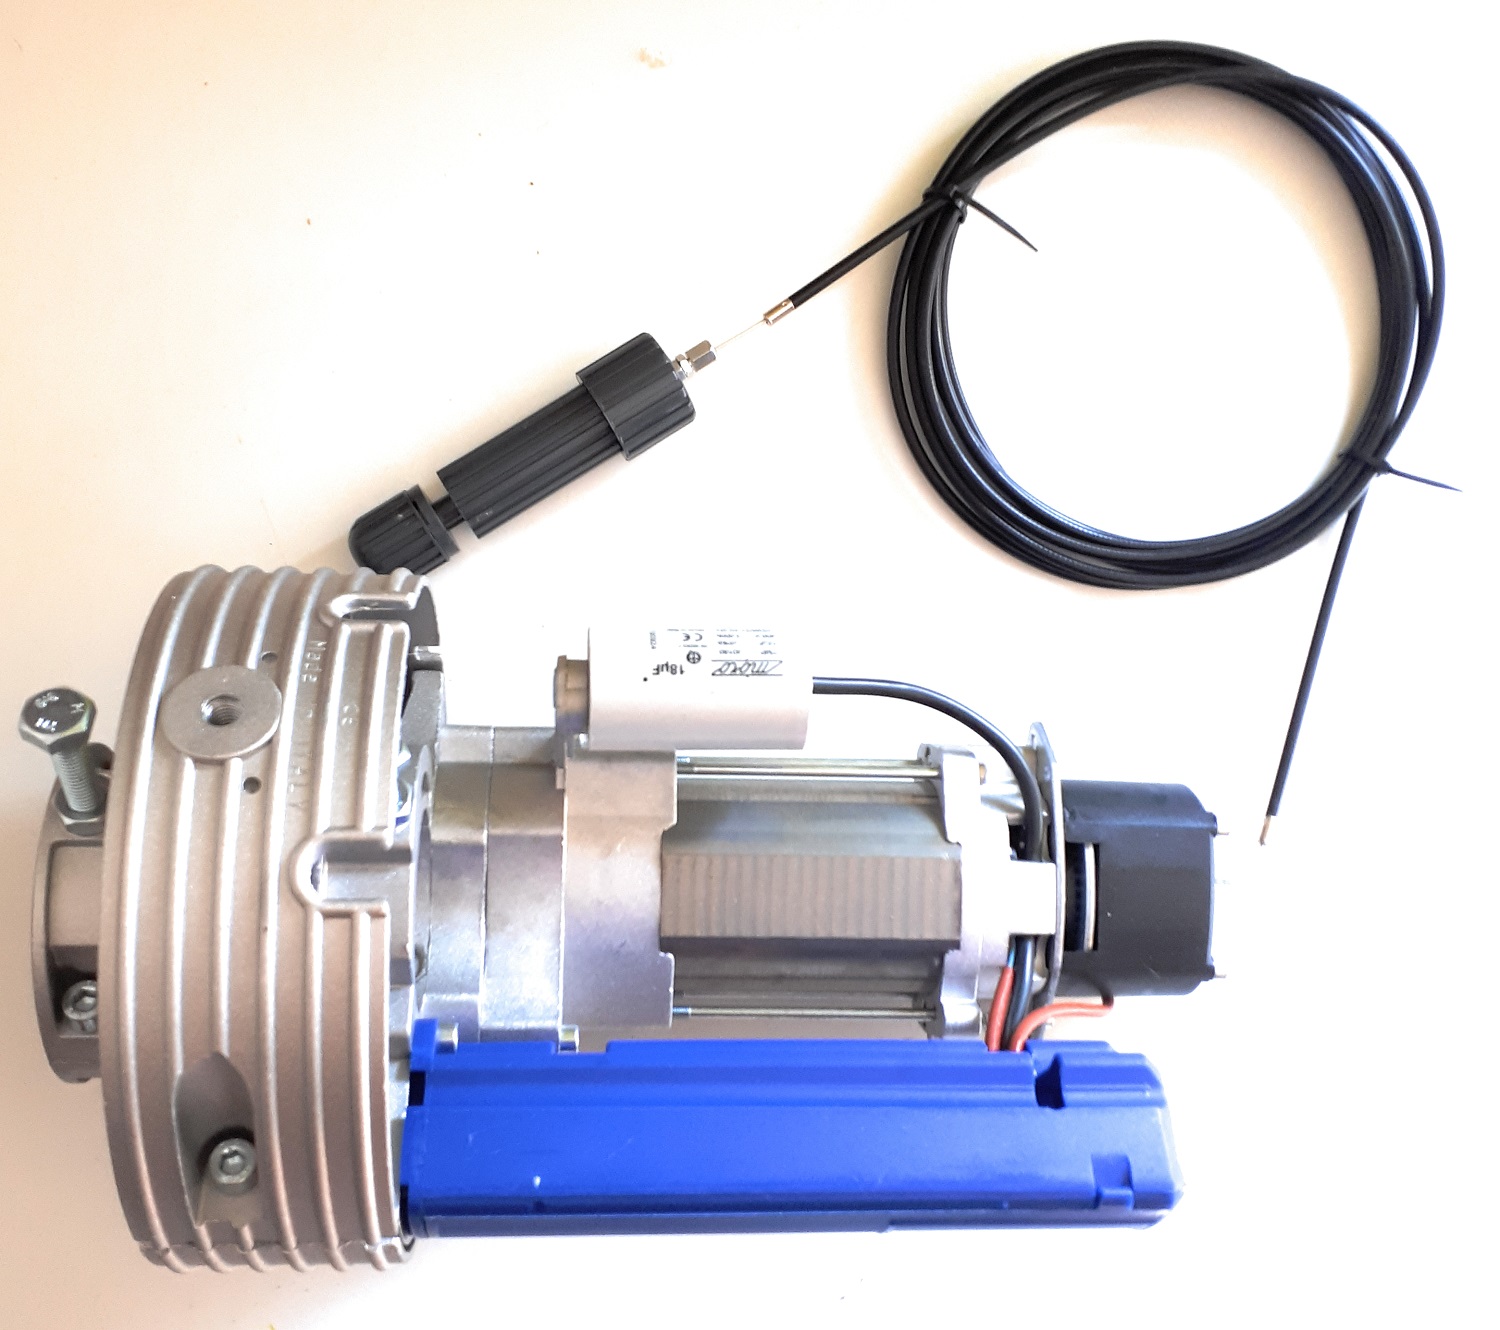 Kit motor ACM sin electrofreno para persiana enrollable de hasta 170KG